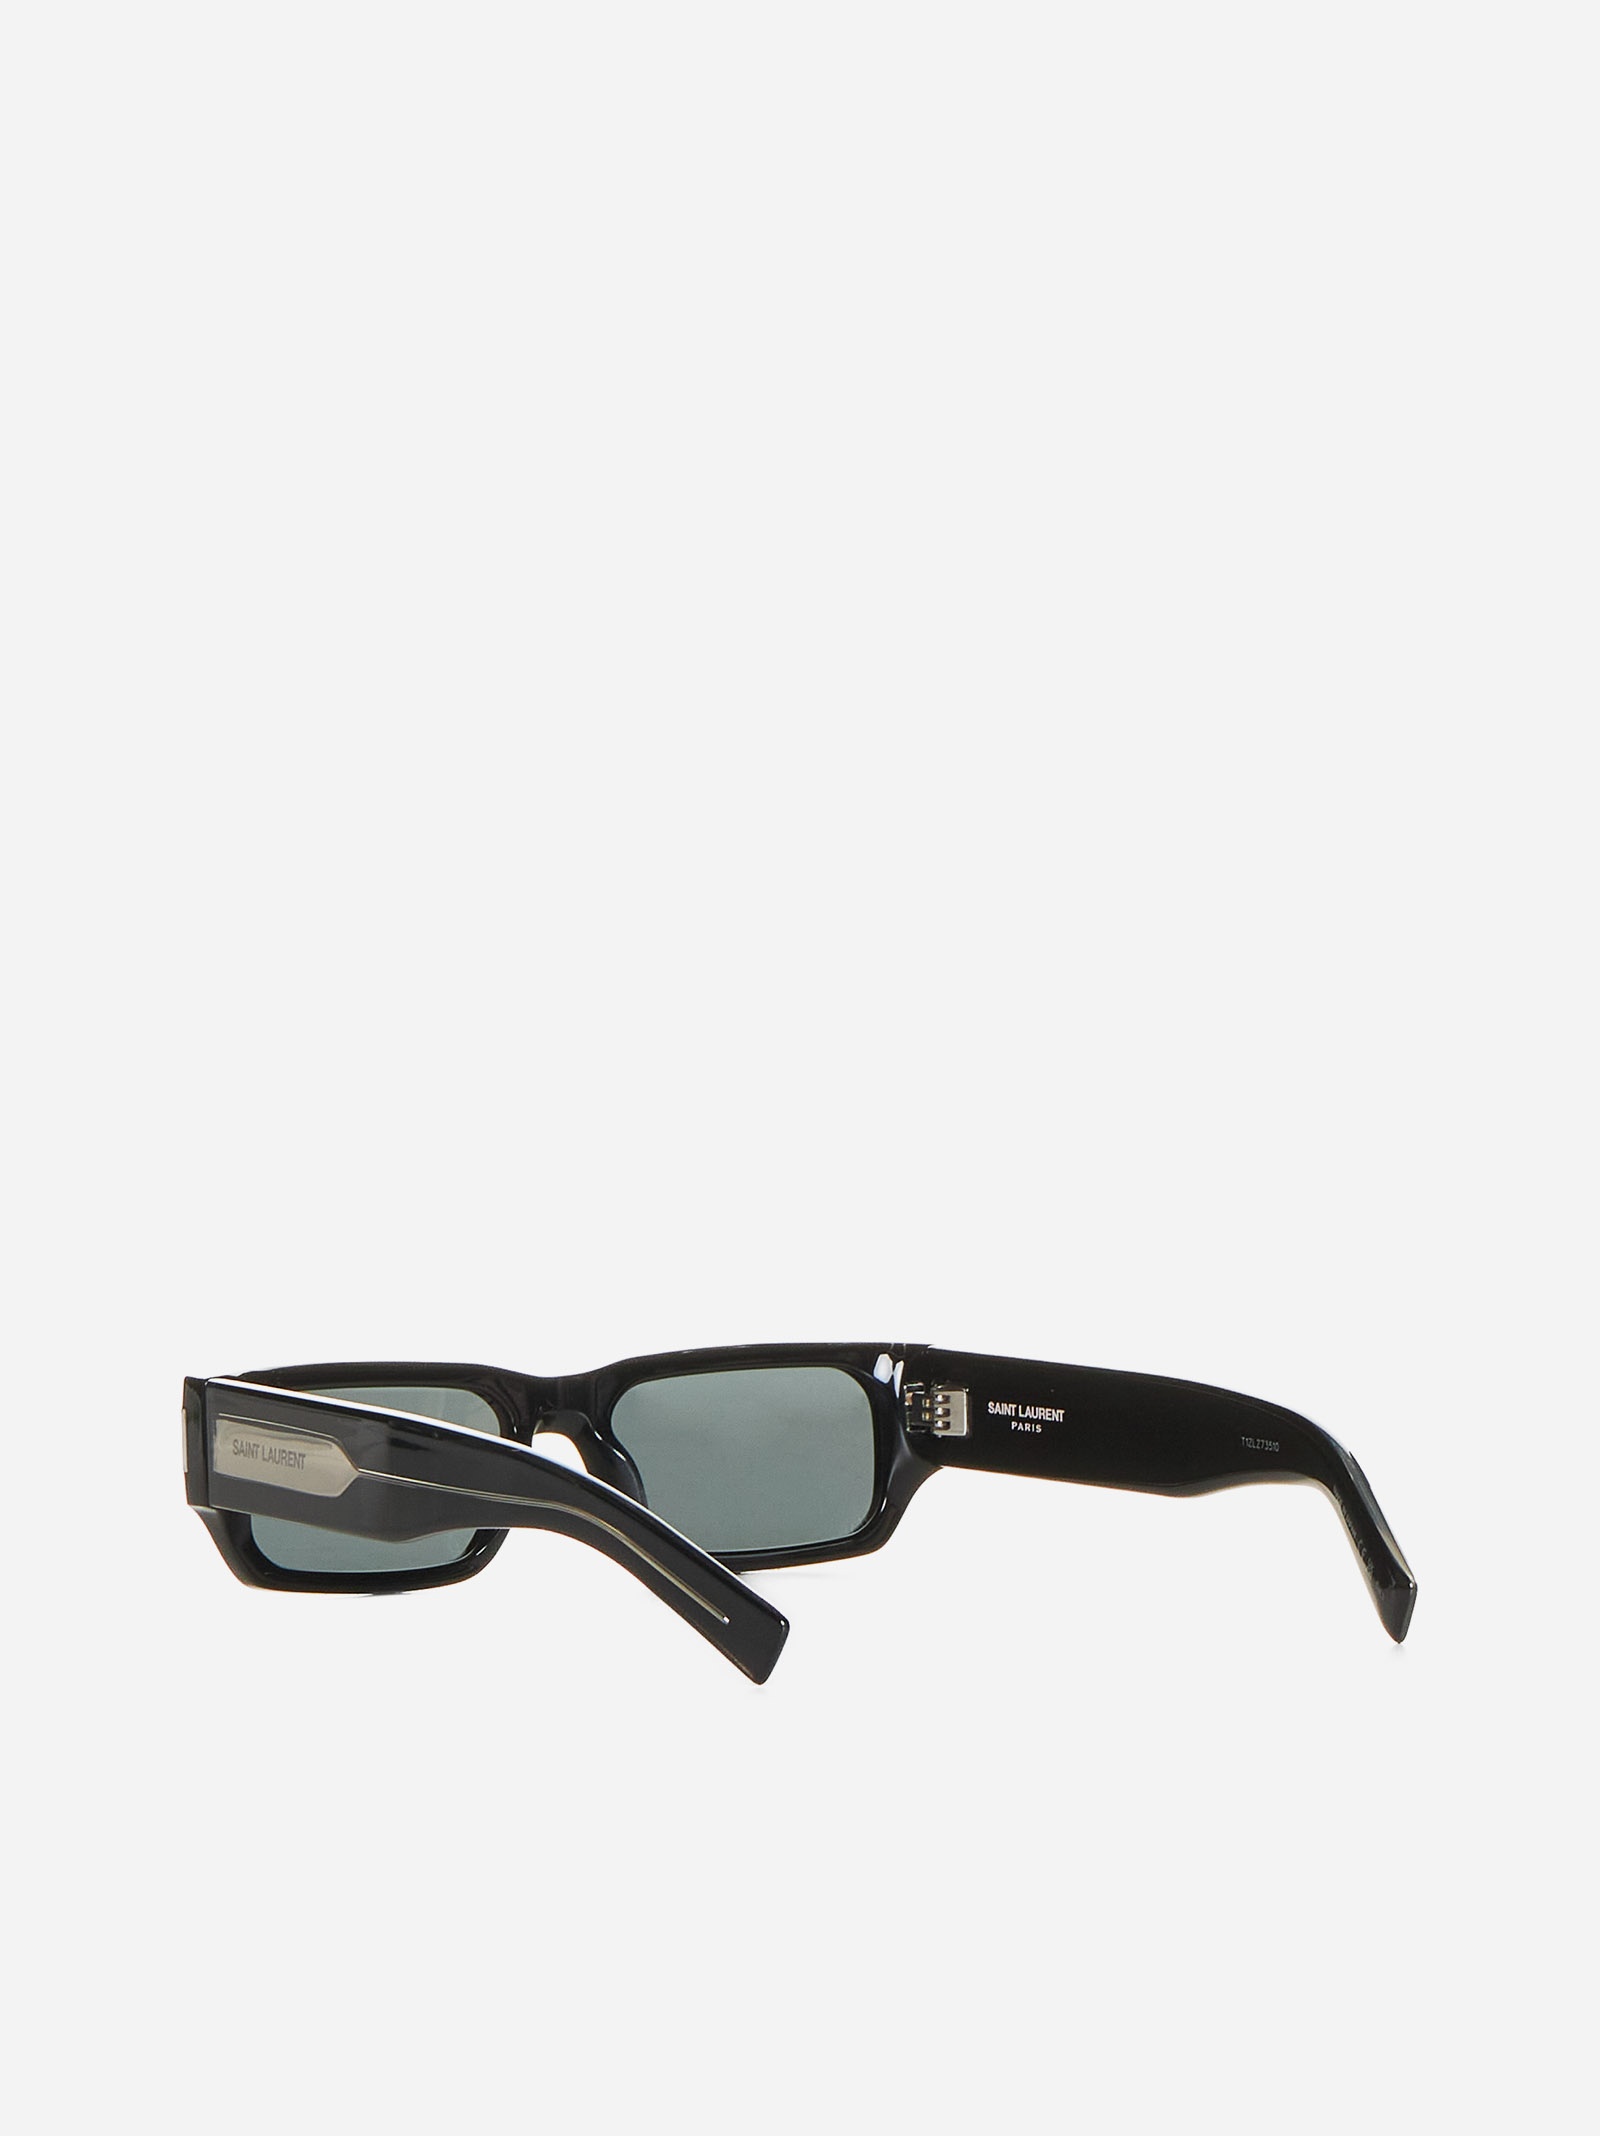 SL 660 sunglasses - 3